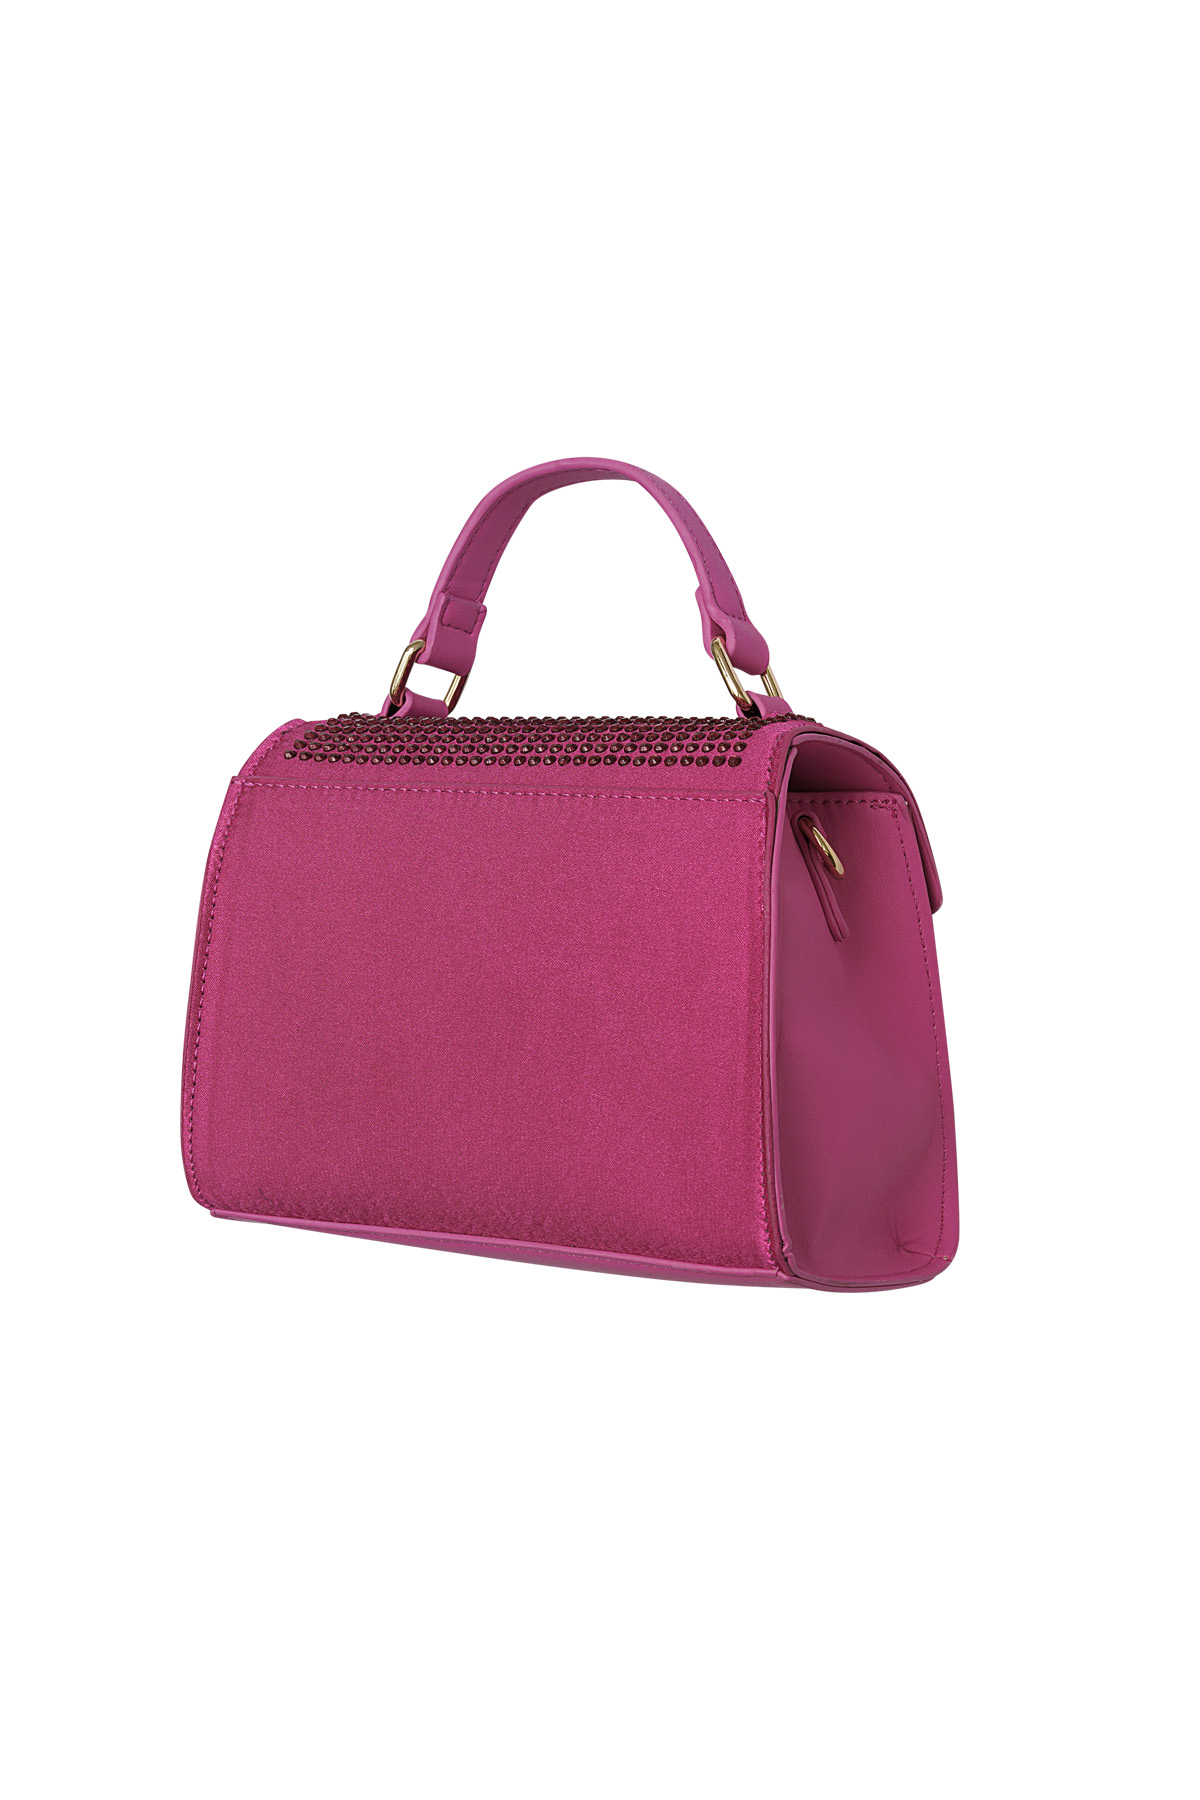 Handbag strass - fuchsia PU Picture6